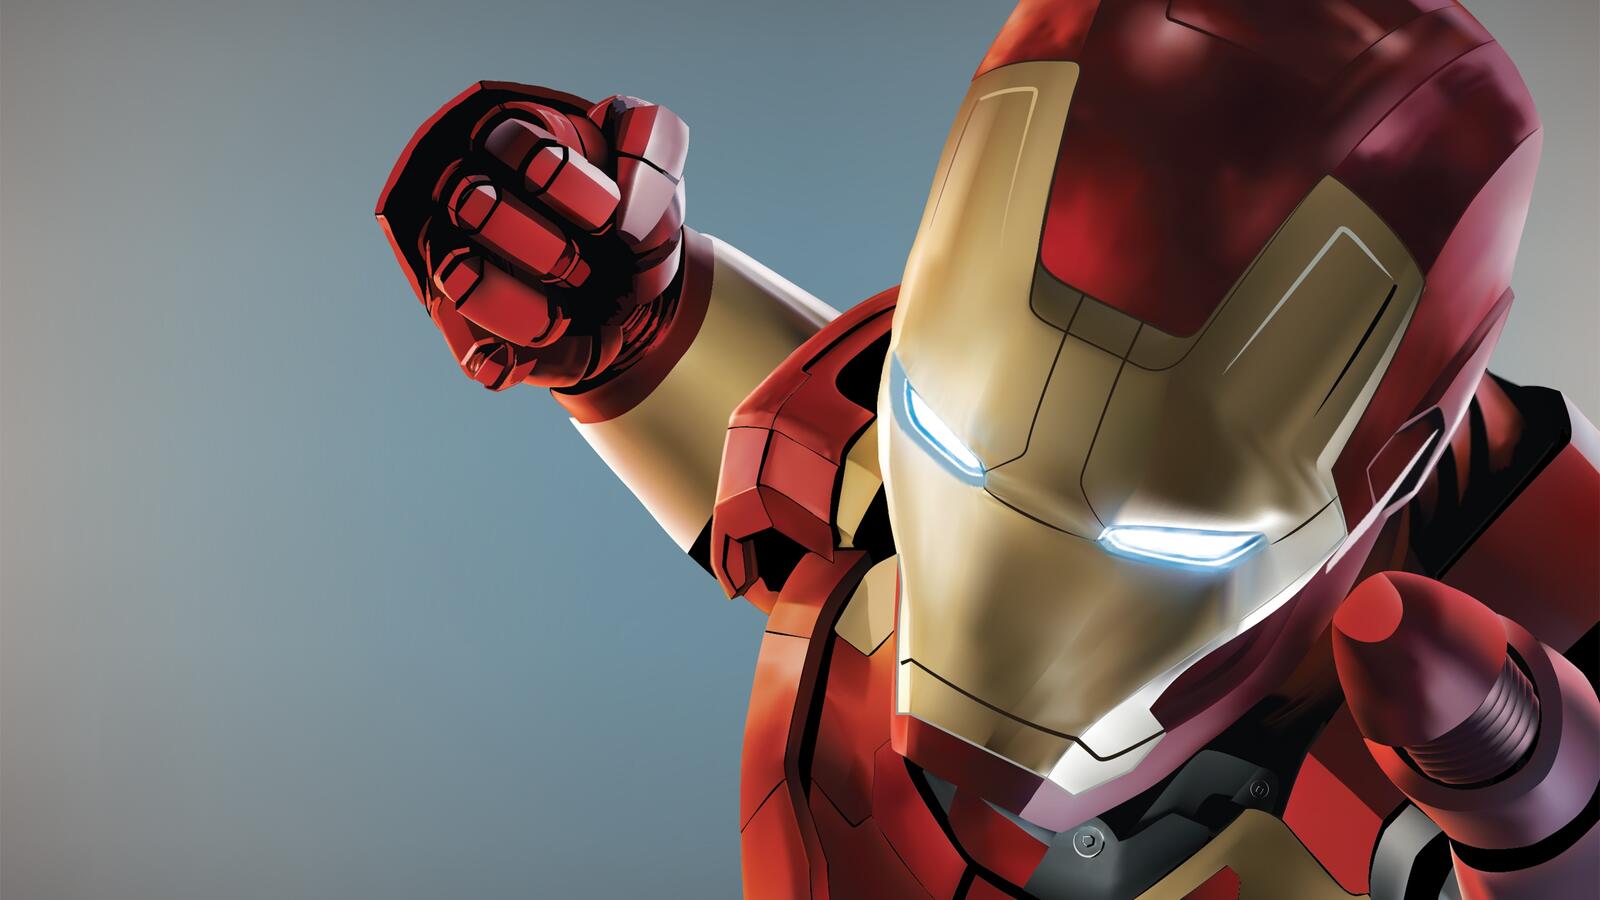 Wallpapers Iron Man fist nano suit on the desktop